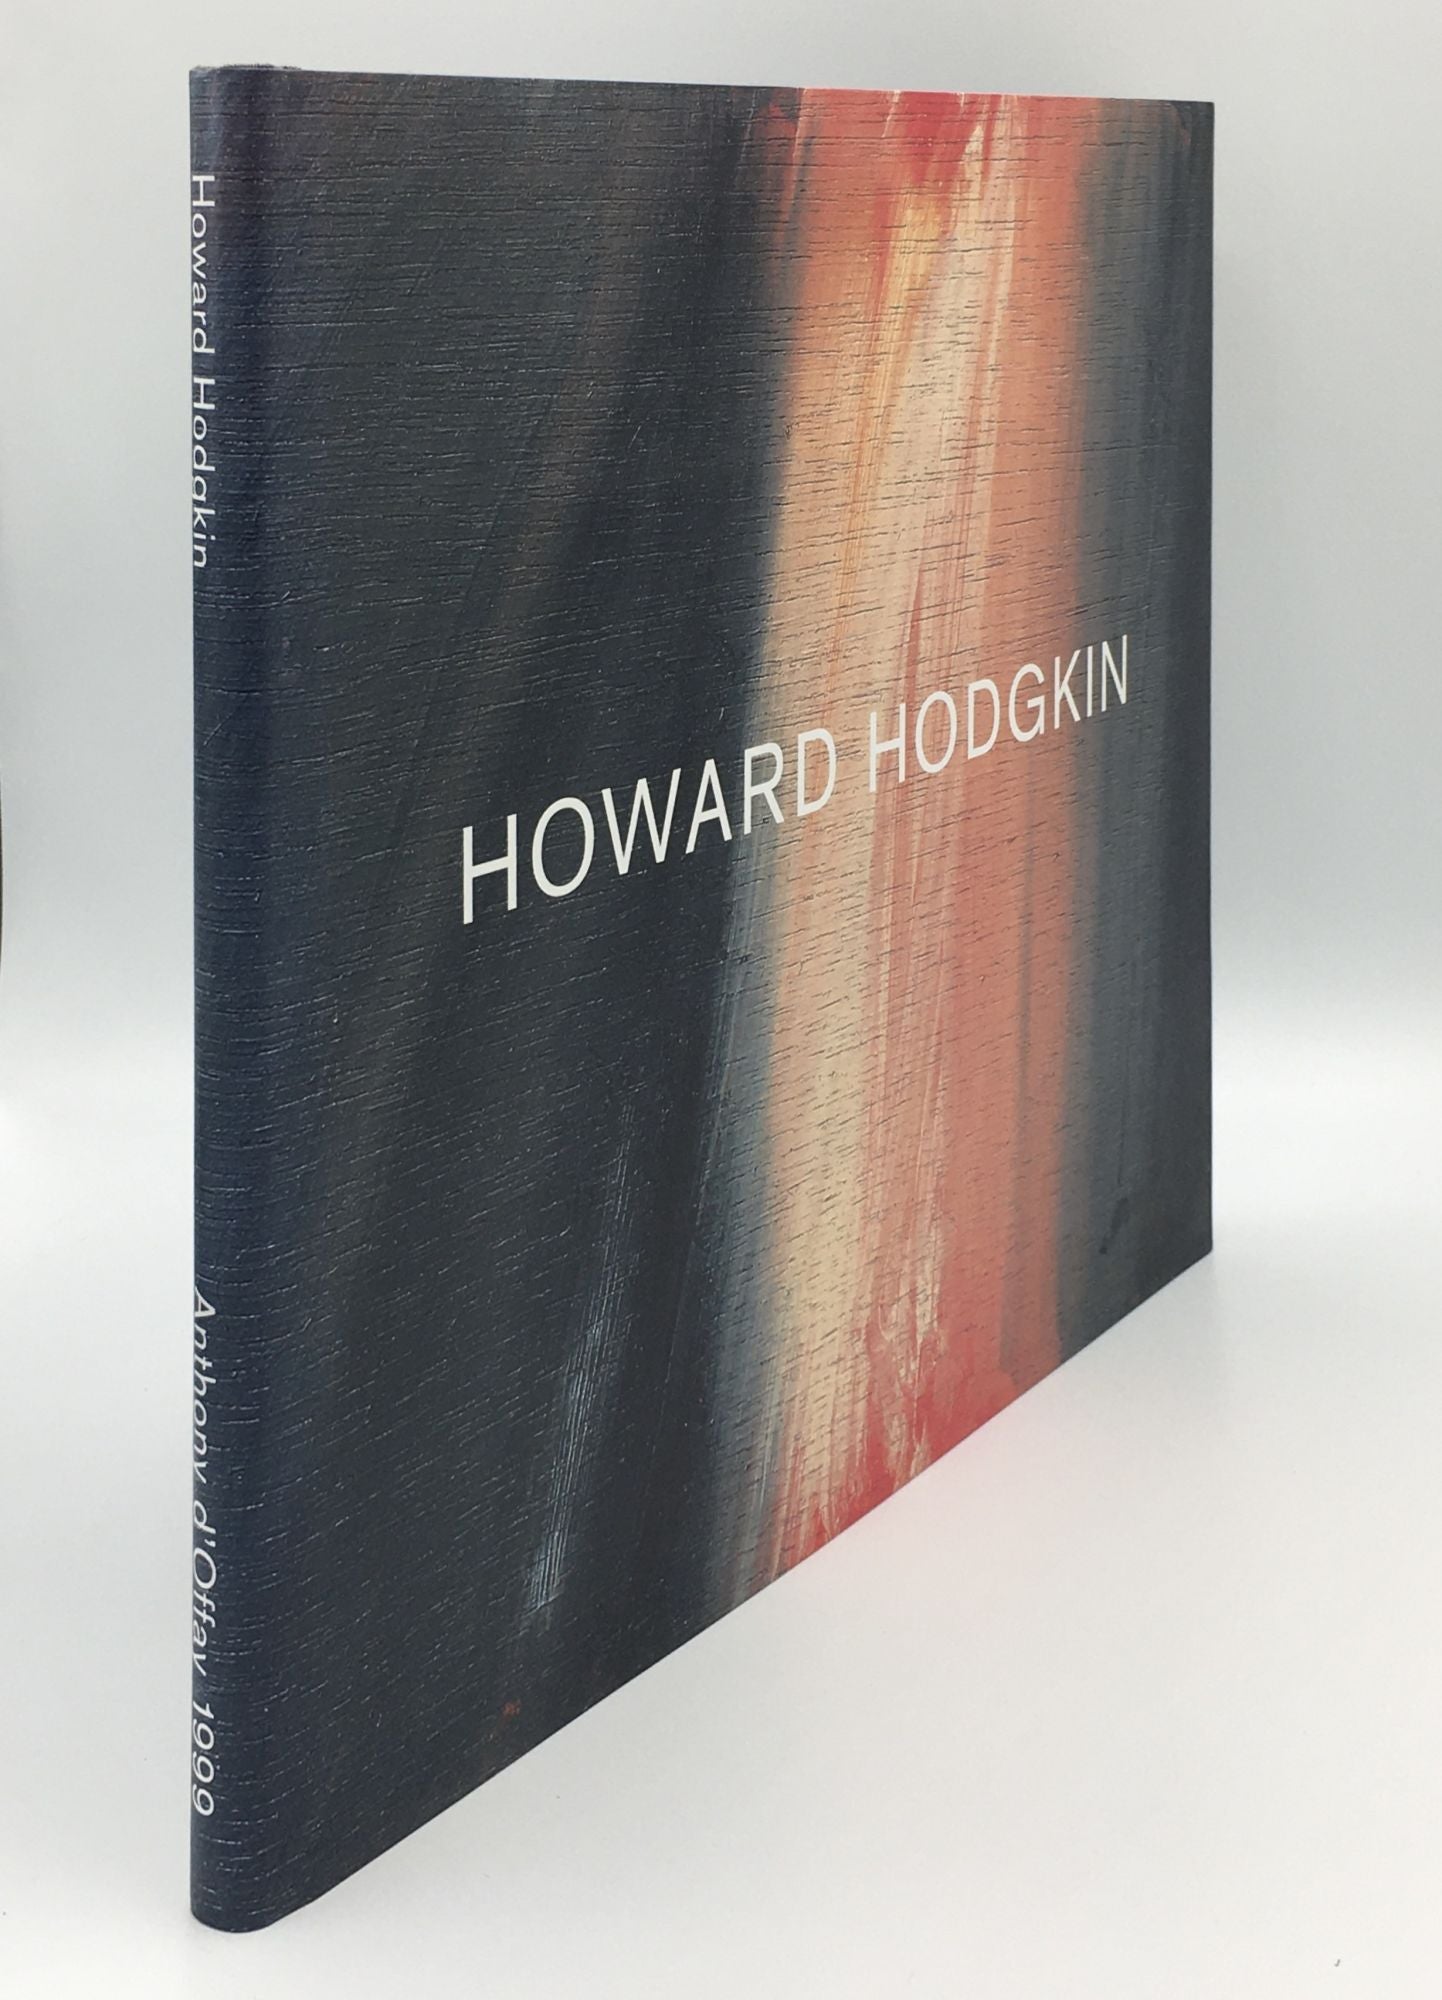 HODGKIN Howard, FENTON James - Howard Hodgkin with 'Remembering the Aurochs'